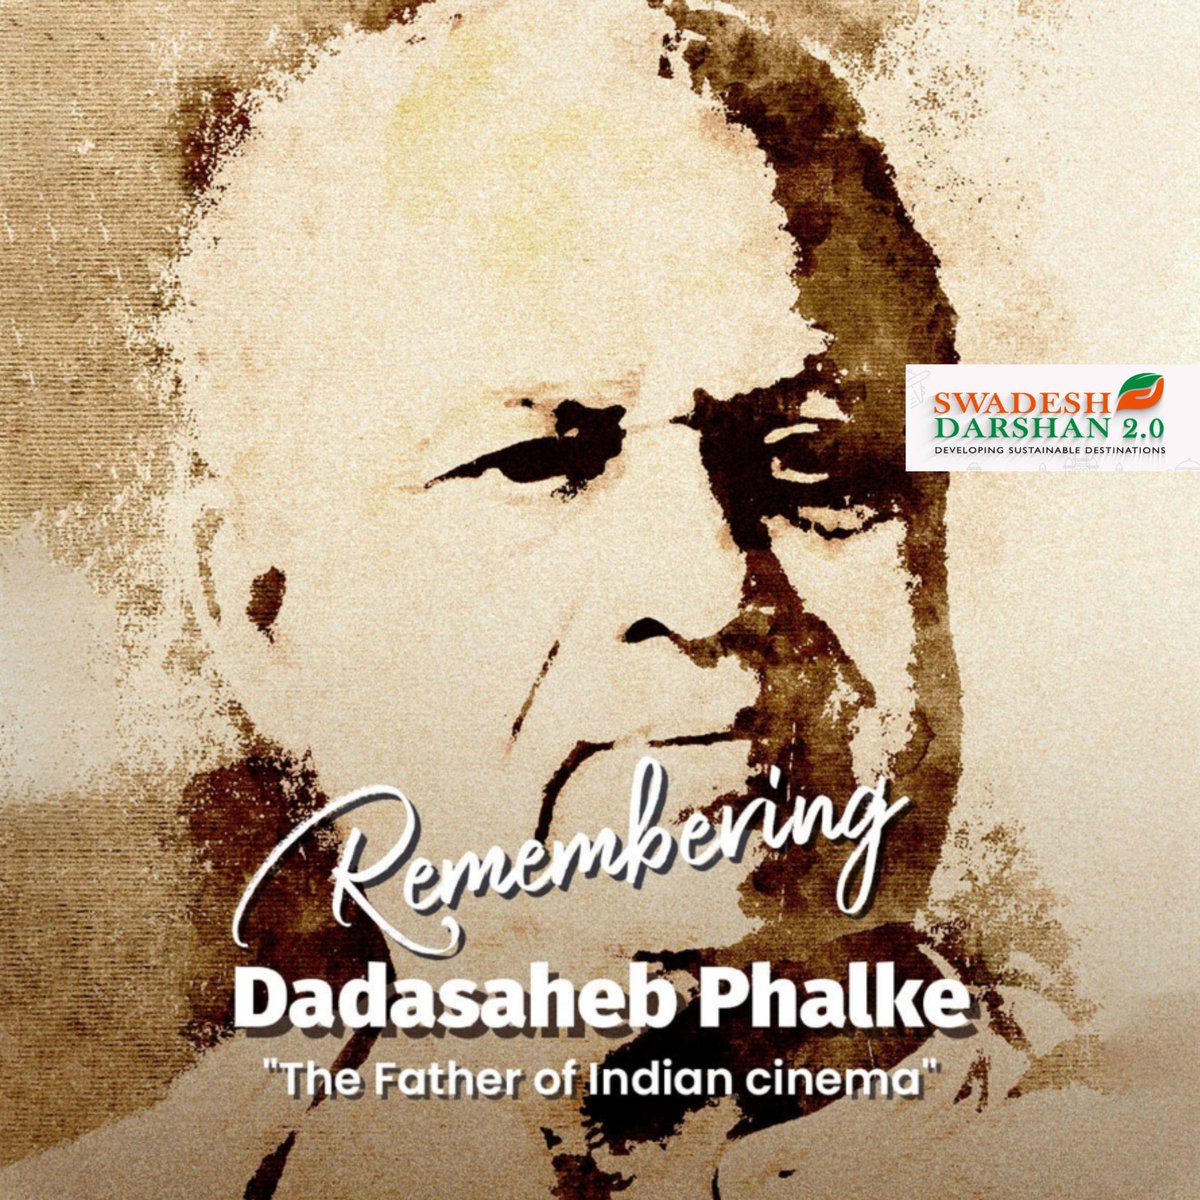 Happy birthday Dadasaheb Phalke, the father of Indian Cinema. He made the first Indian film 'Raja Harishchandra' in 1913.
 @swadesh_darshan @incredibleindia  @dpiff_official 
#birthday #bollywood #dadasahebphalke #filmmaking